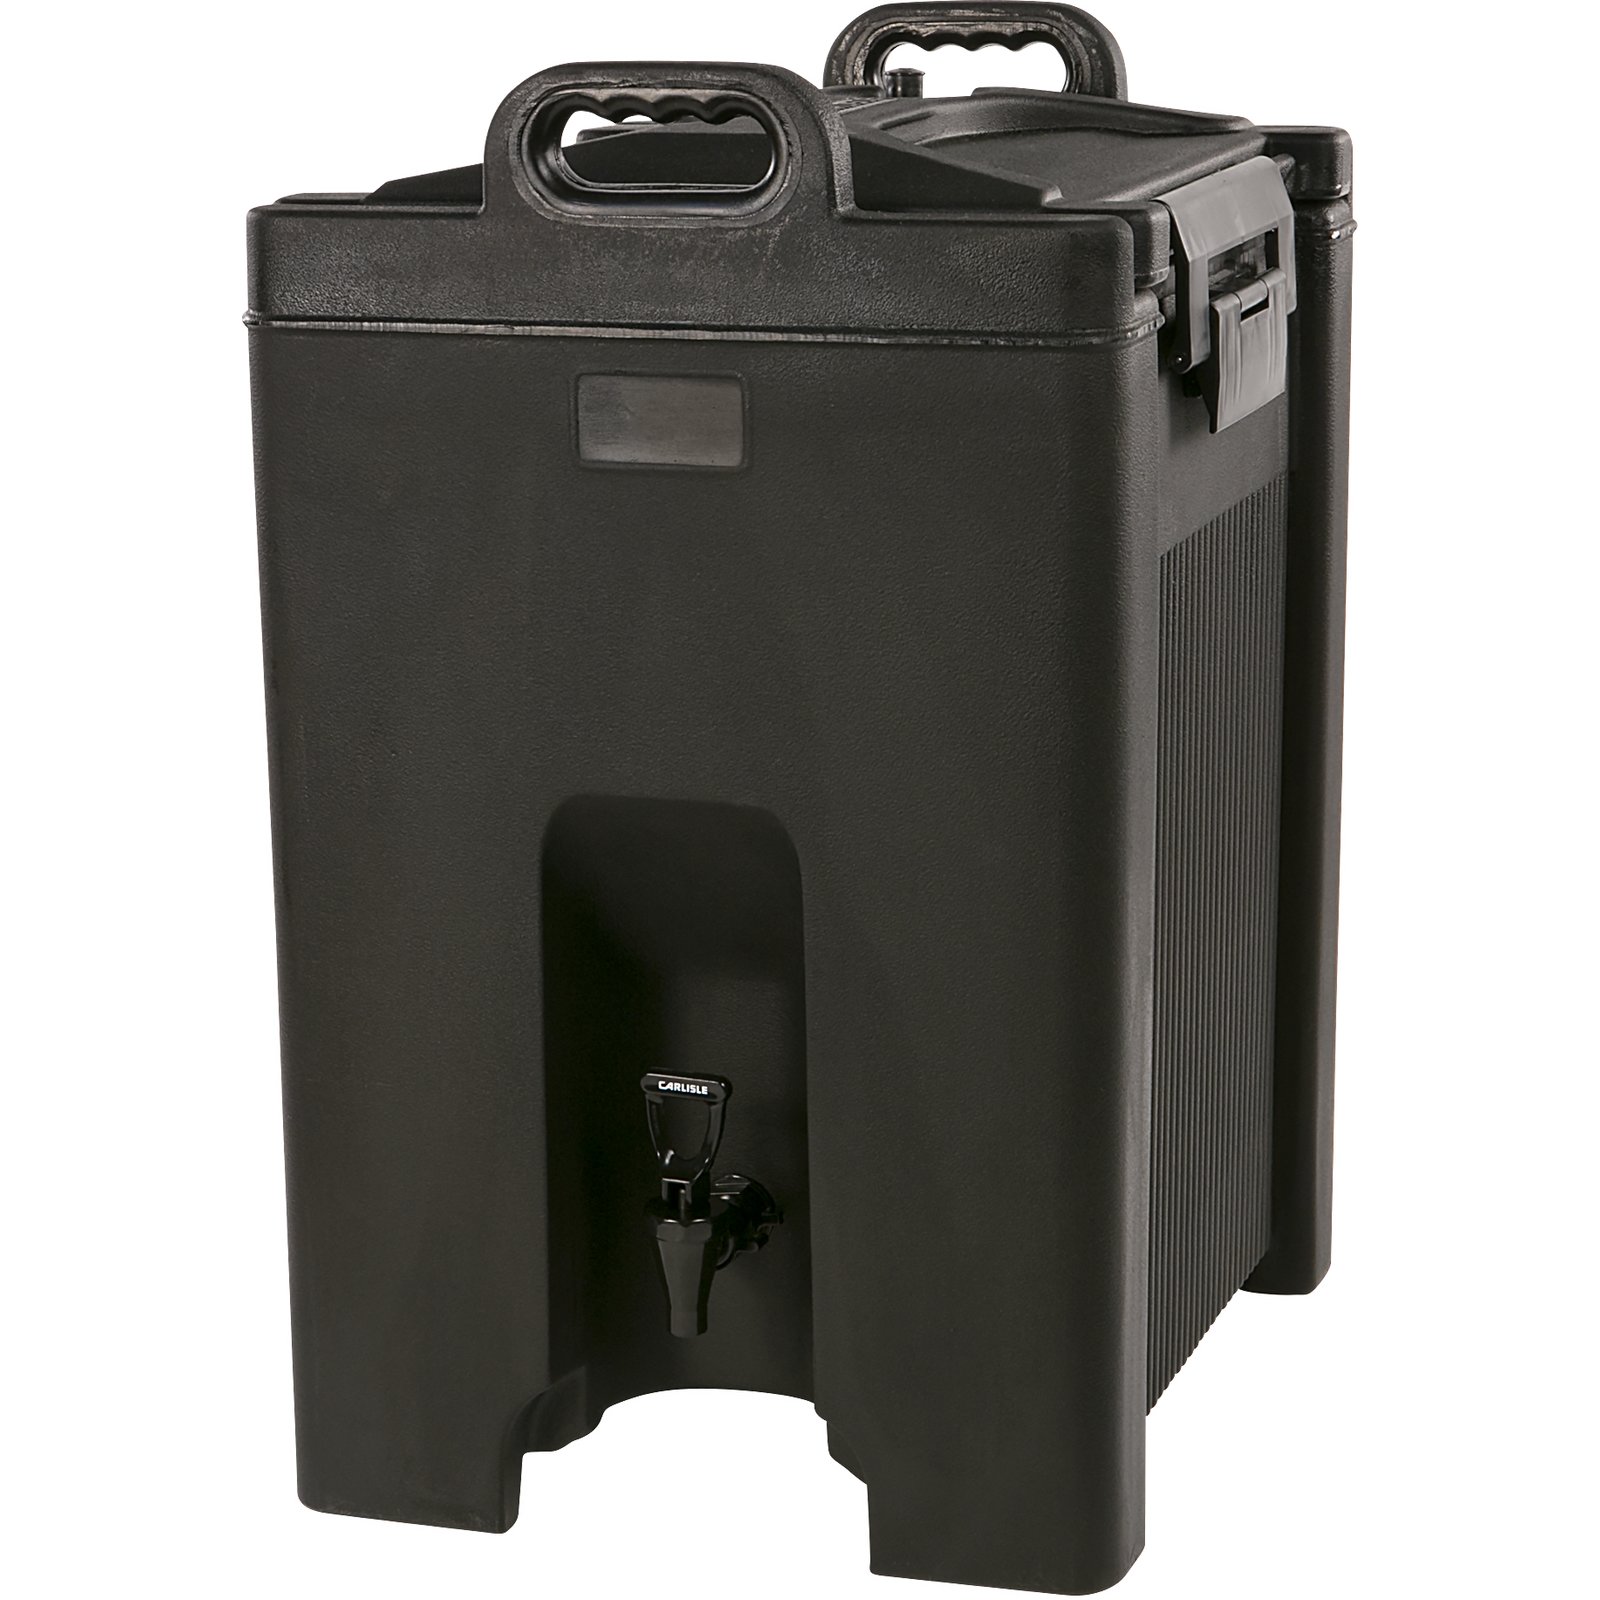 Hubert 4 3/4 Gal Black Insulated Beverage Dispenser